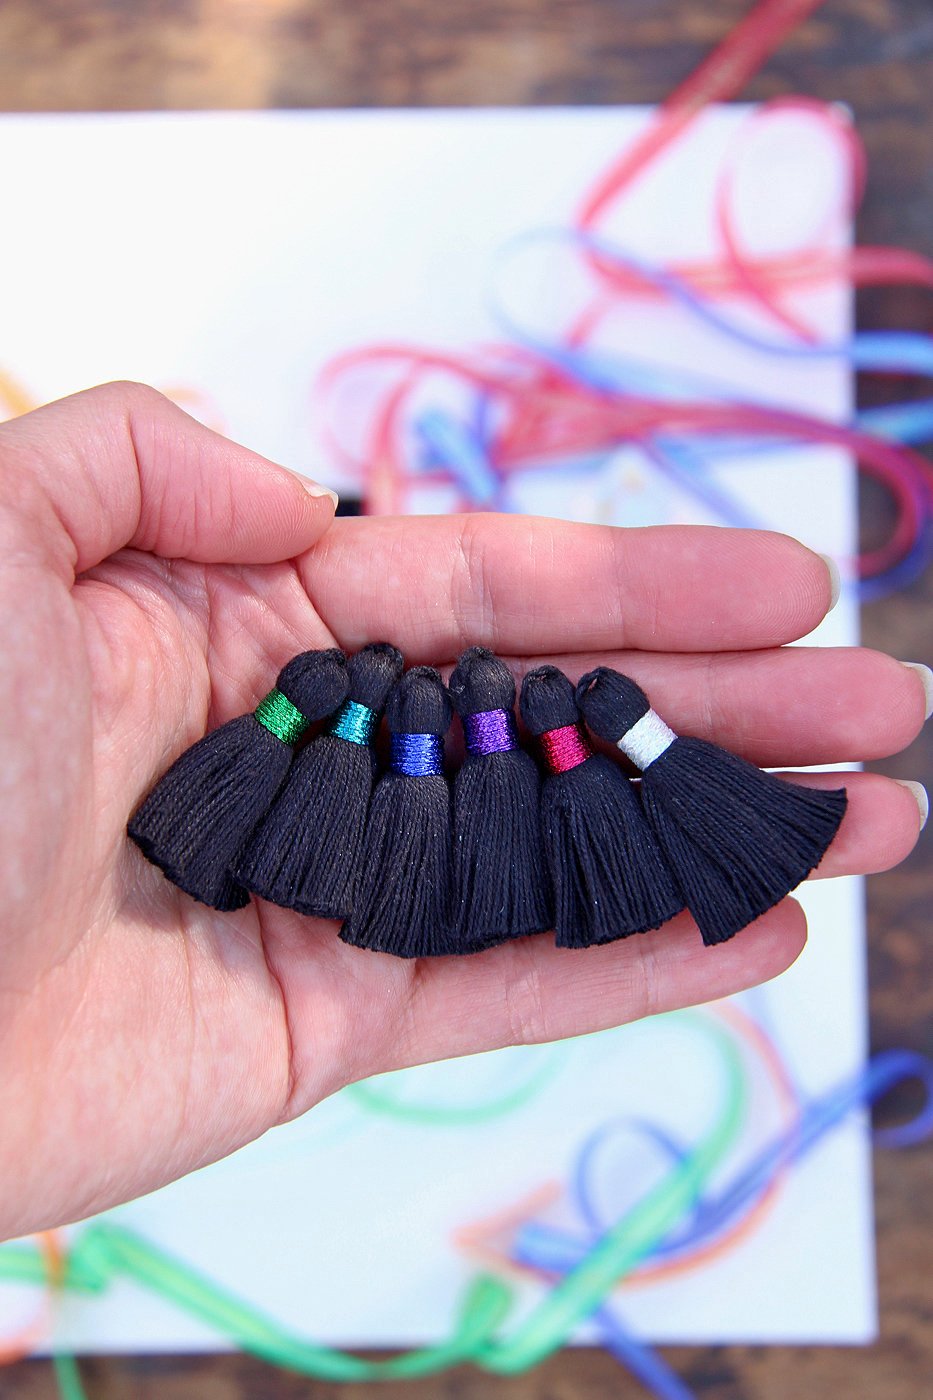 Mini Black Cotton Tassels, Metallic Binding, 1.25" DIY Jewelry Making Supplies, Boho Fringe Pendant